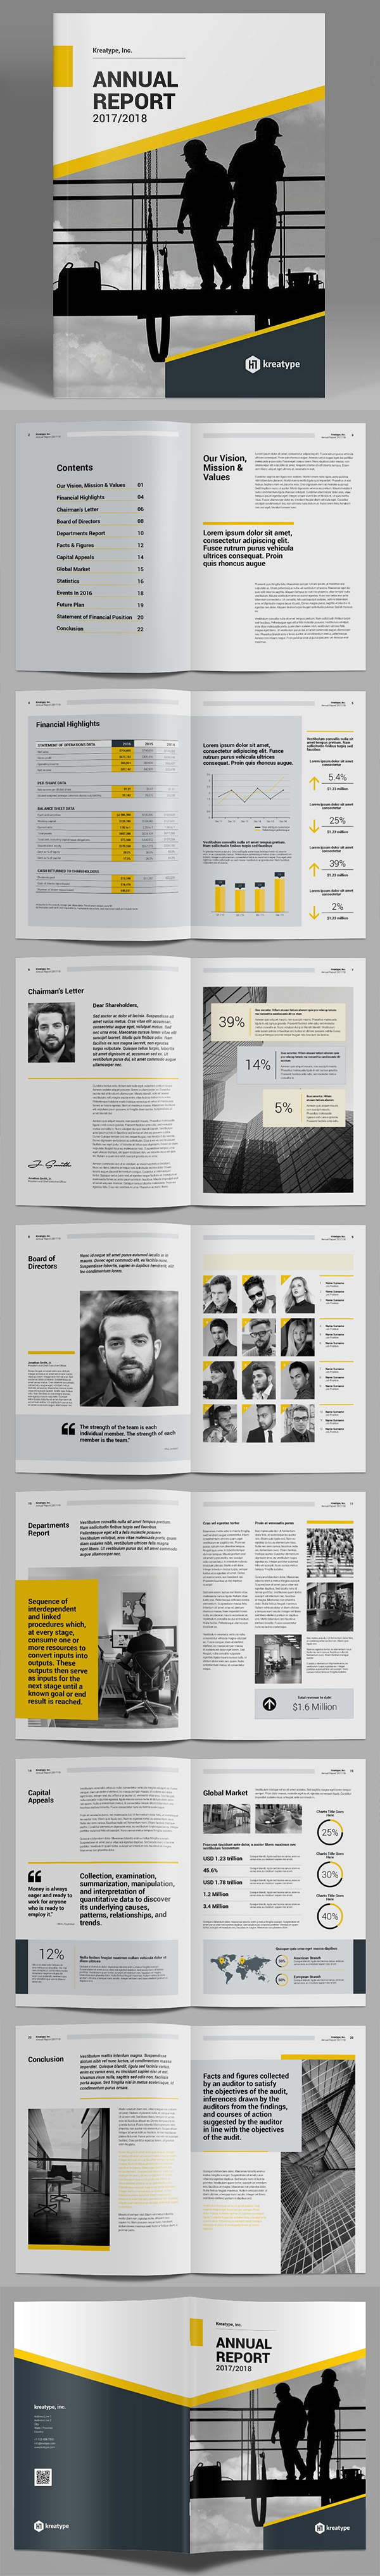 Kreatype Annual Report Template